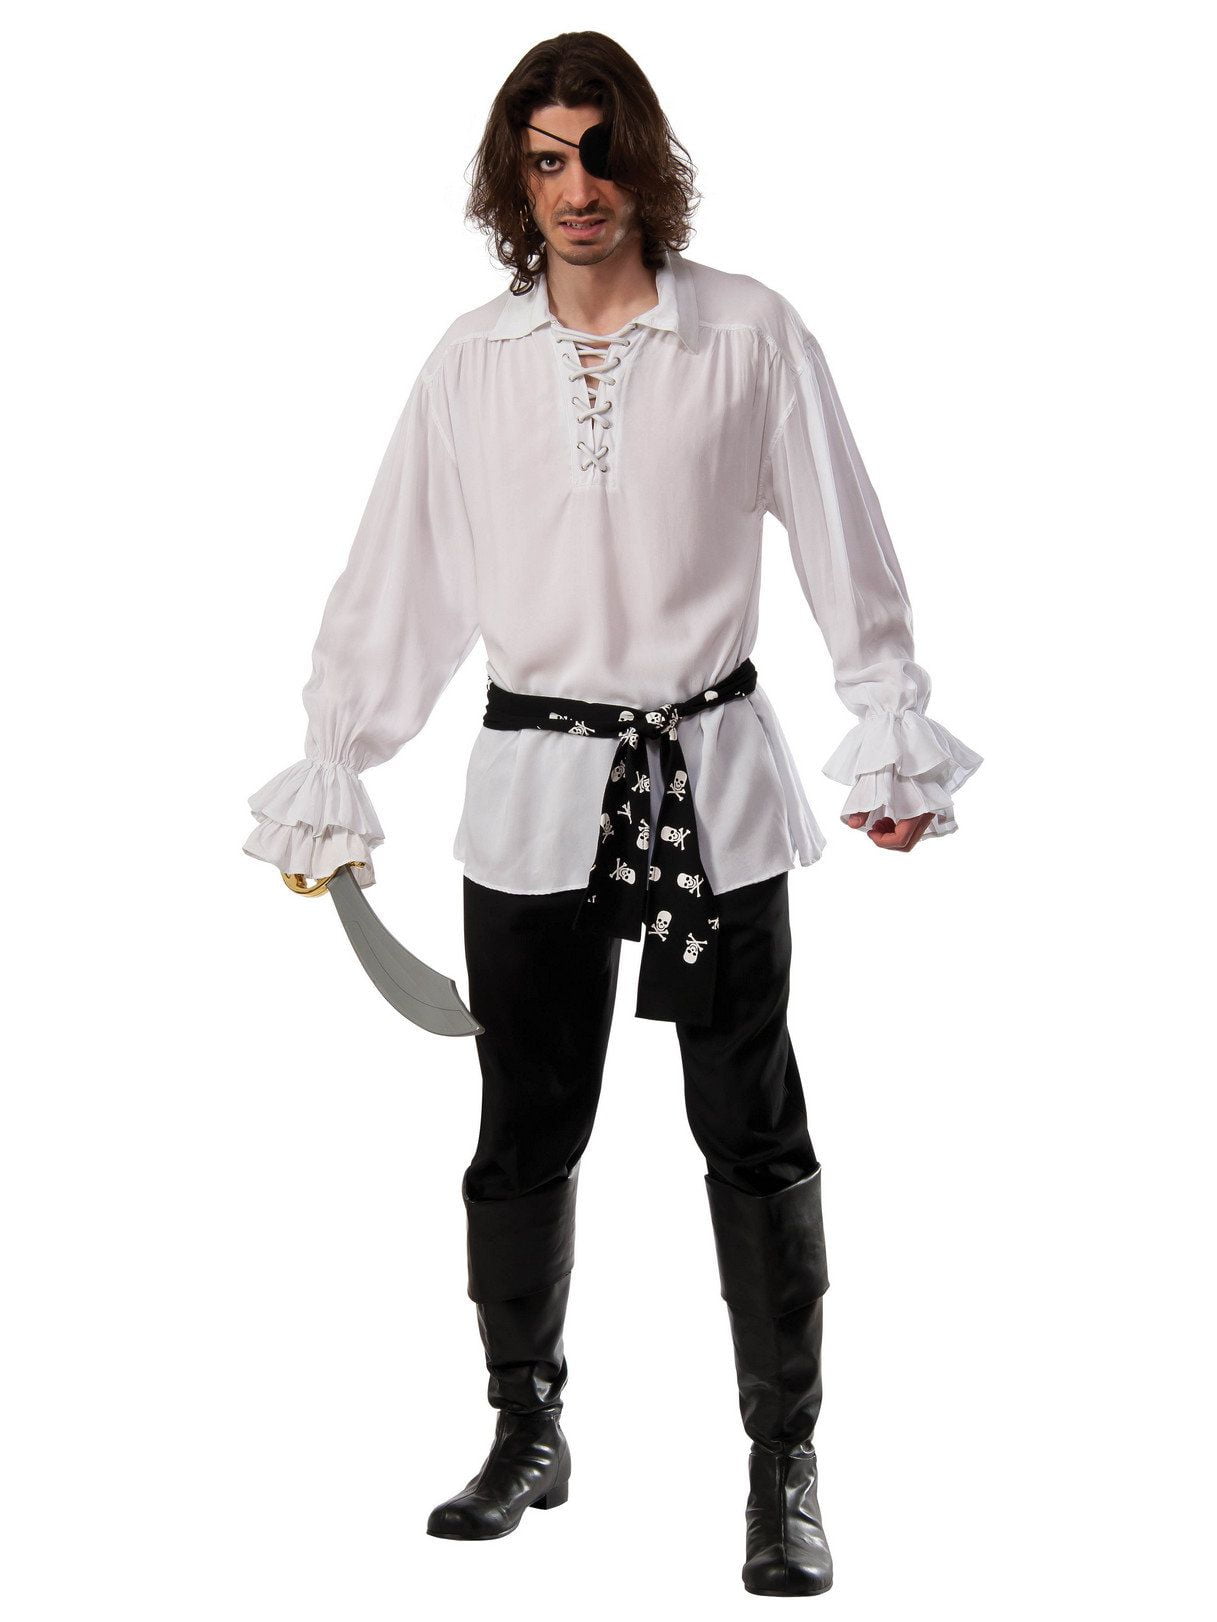 Pirate Shirt Men's Fancy Dress